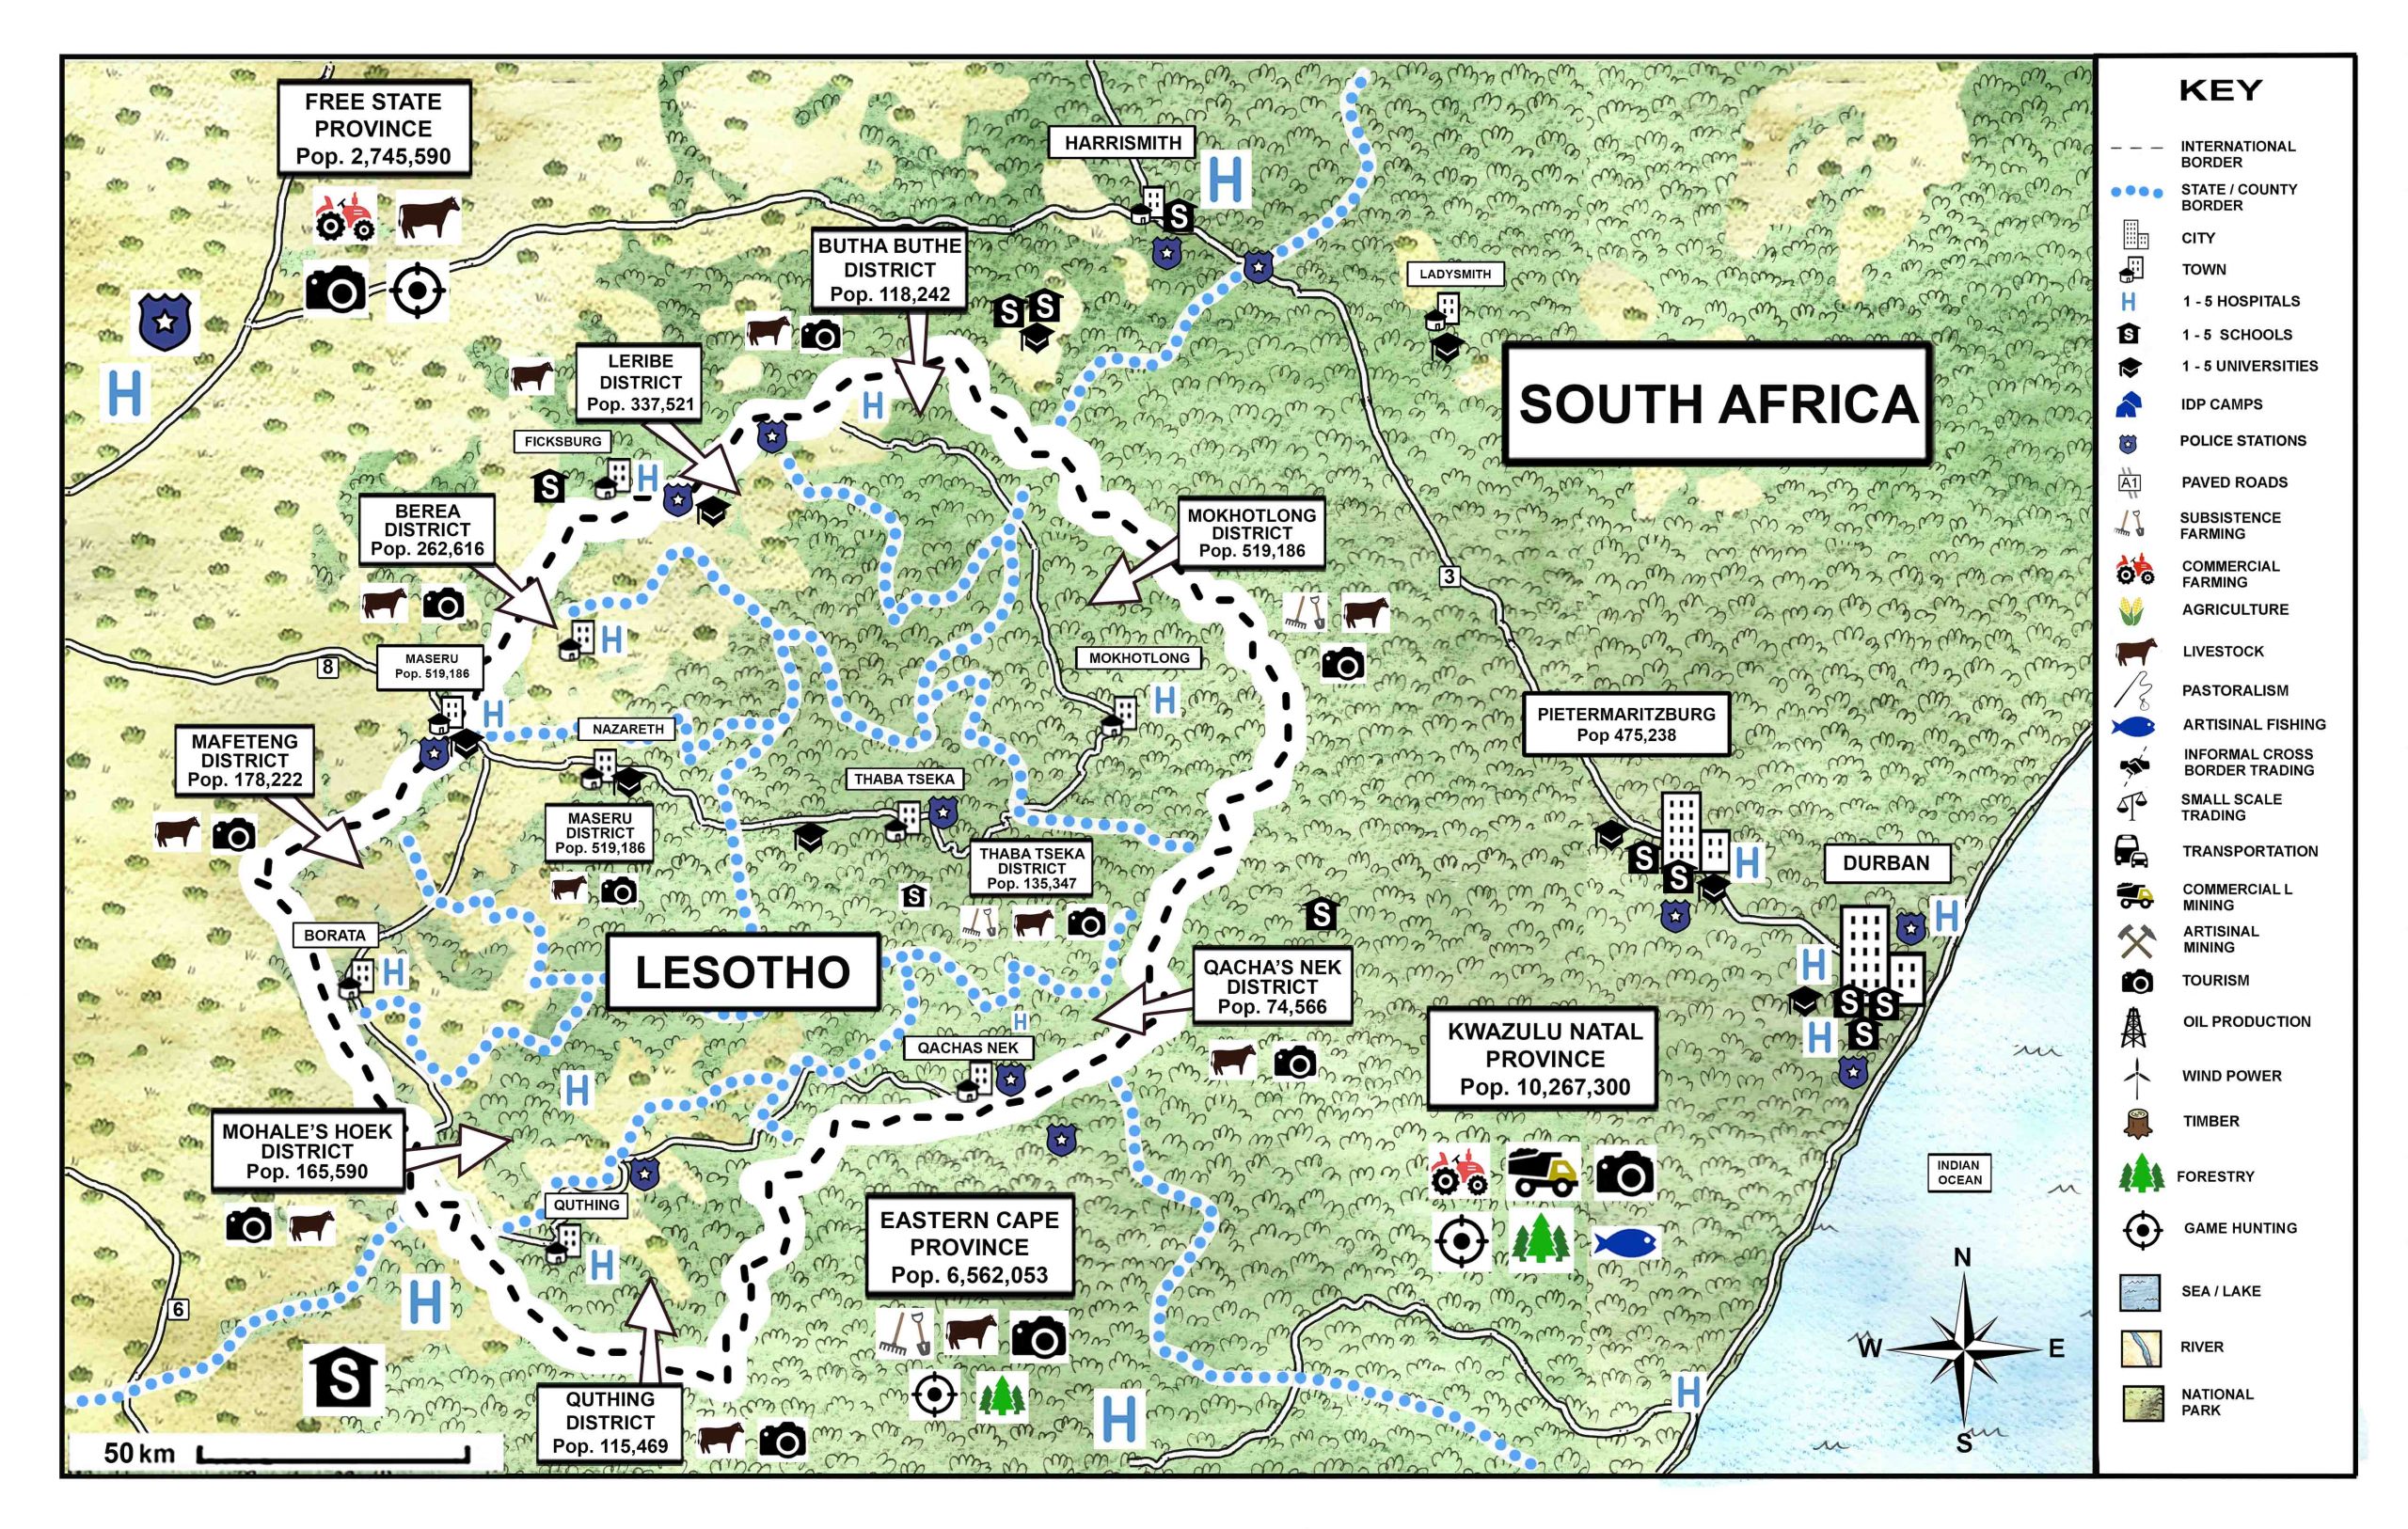 LESOTHO - SOUTH AFRICA_illustration